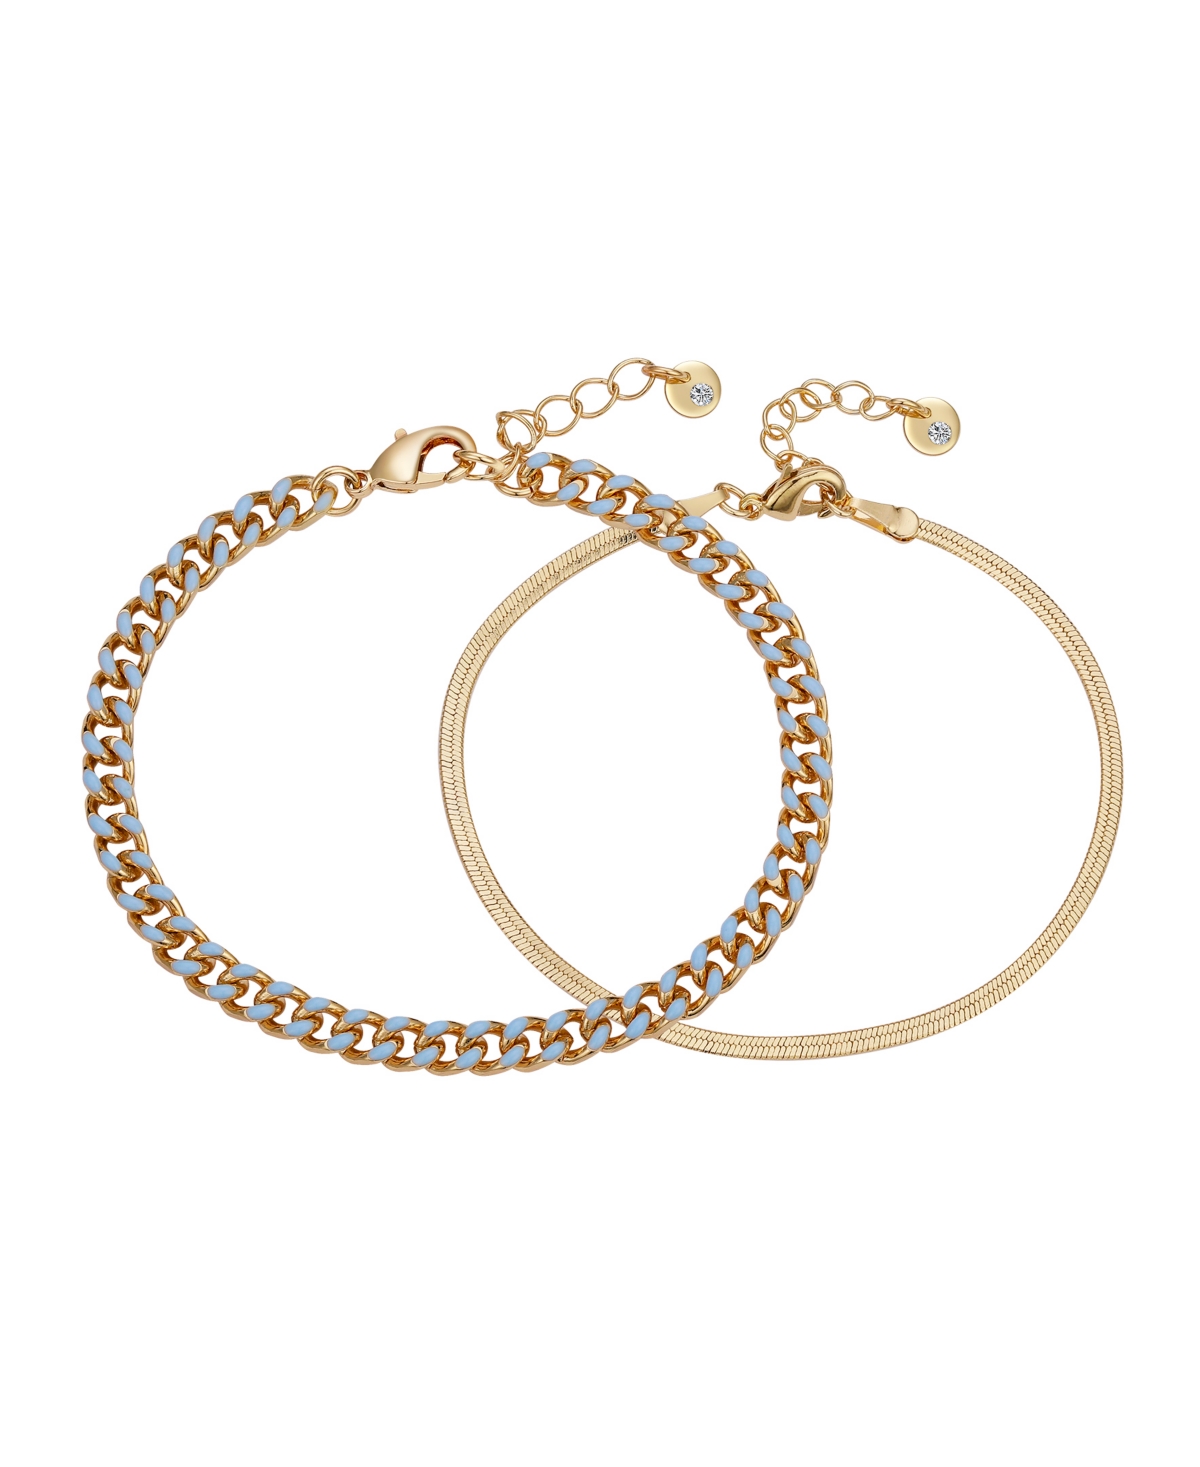 Unwritten 14k Gold Flash-plated Light Pink Enamel Curb Chain And Herringbone Chain Bracelet Set